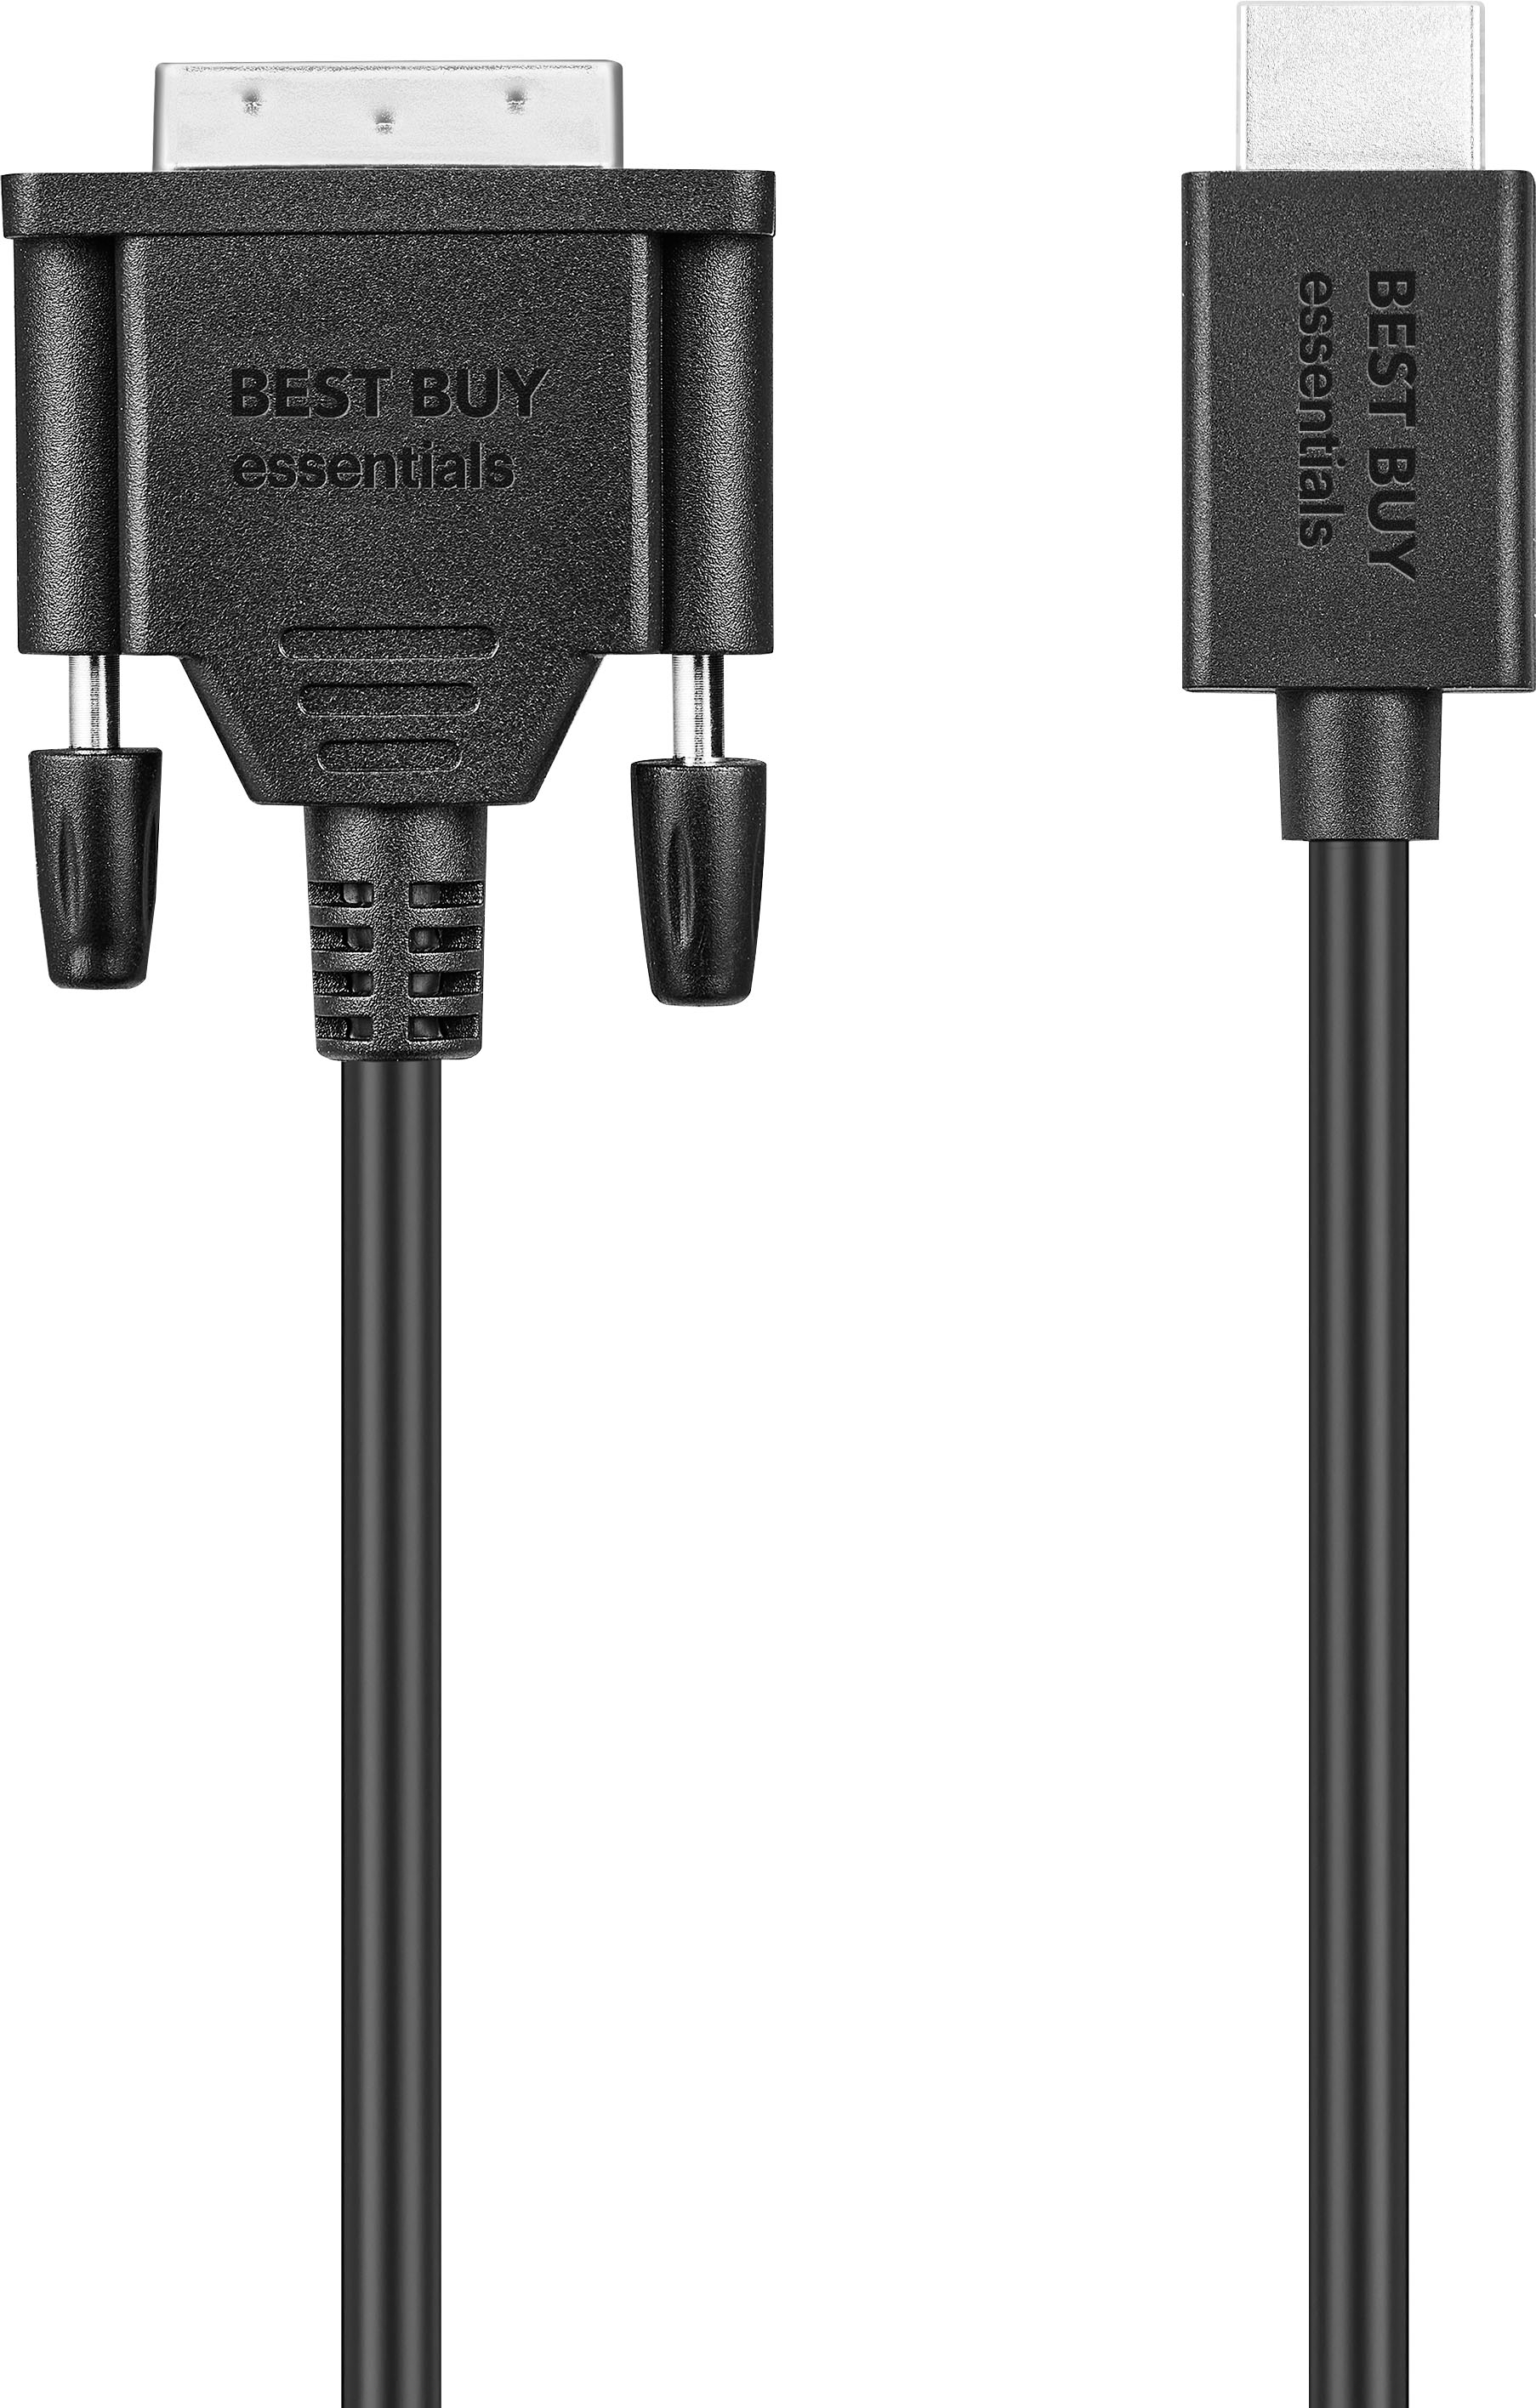 Best Buy essentials™ 6' DisplayPort Cable Black BE-PCDPDP6 - Best Buy